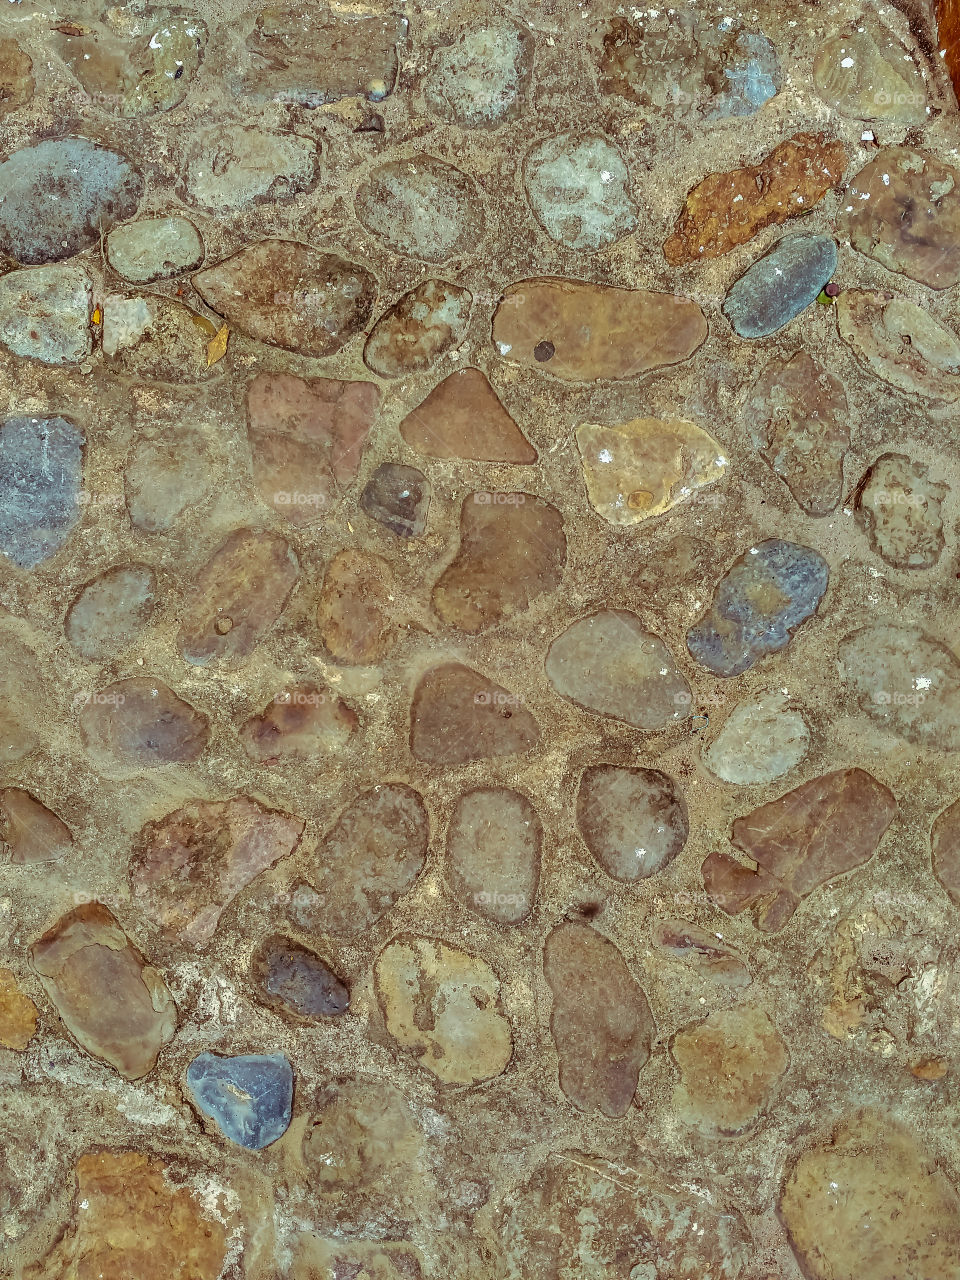 Stones like a texture on the floor